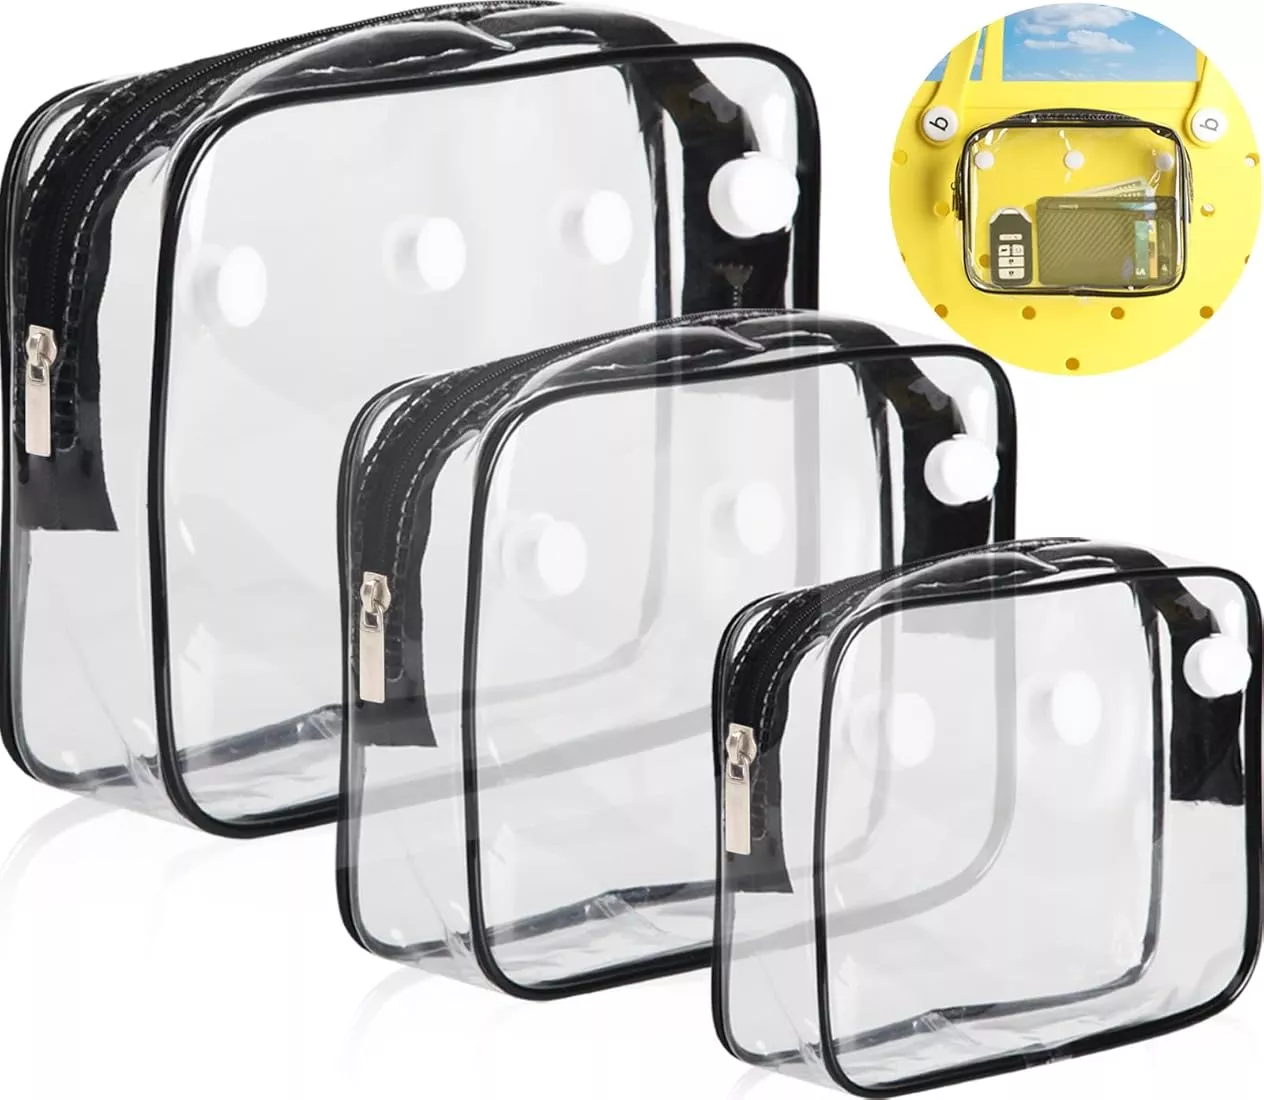 Cup Holder for Bogg Bag, 2 Pack Drink Holder Accessories for Bogg Bags,  Insert C